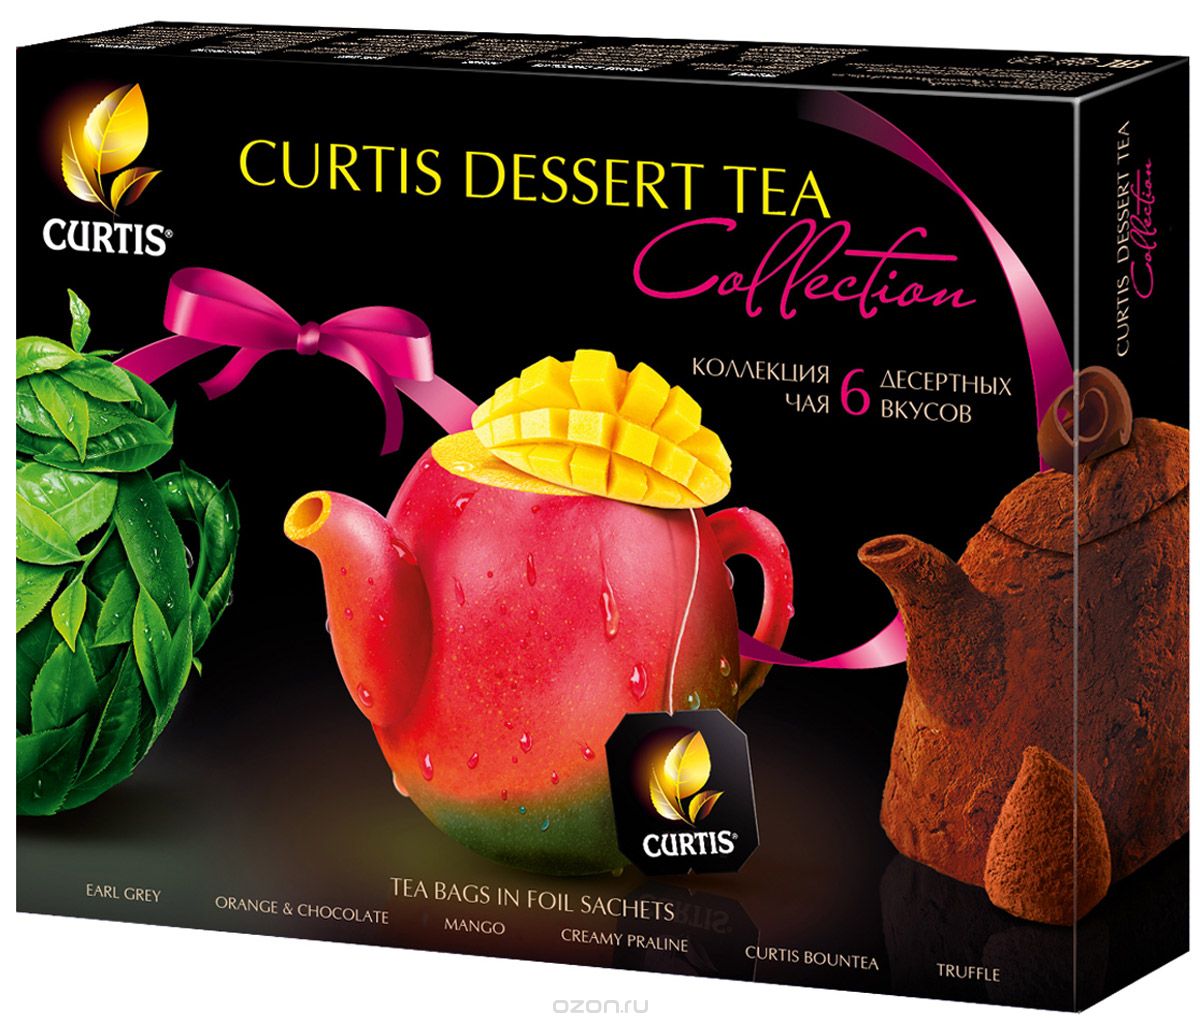 Curtis Dessert Tea Collection  , 30 